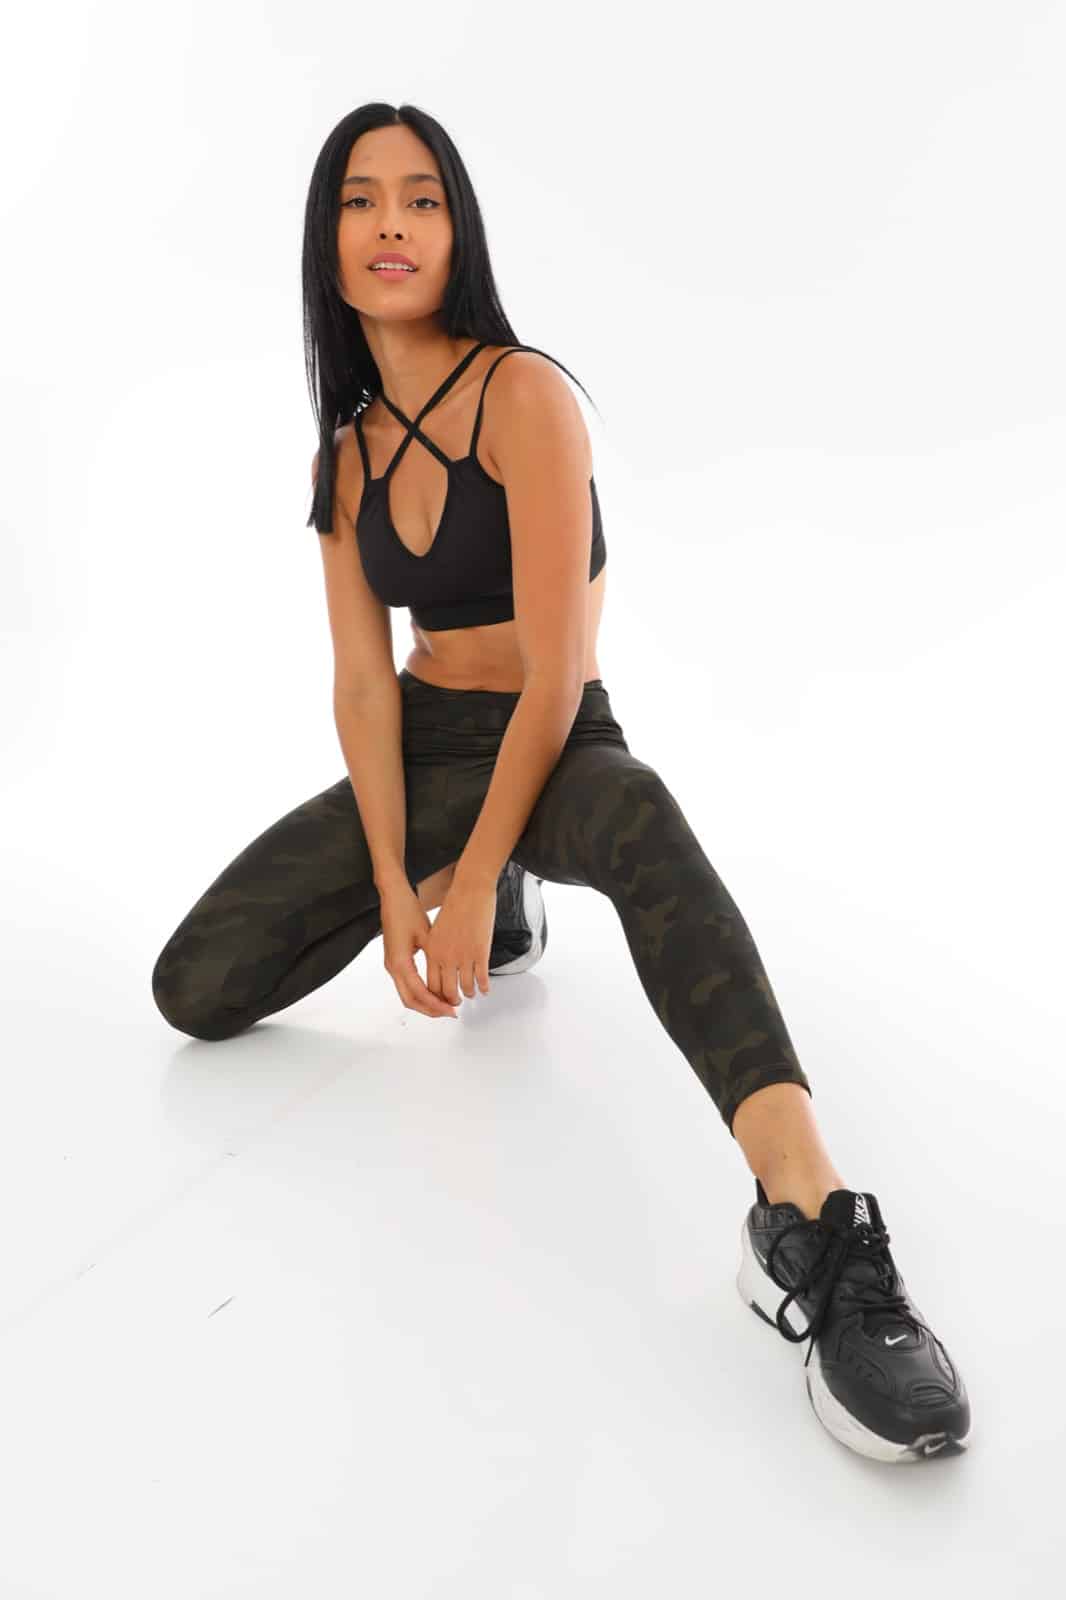 Memoryee Camo Seamless Yoga Leggings with High Waist Workout Running  Leggings for Women Stretch Gym Yoga Pants, Green : : Fashion